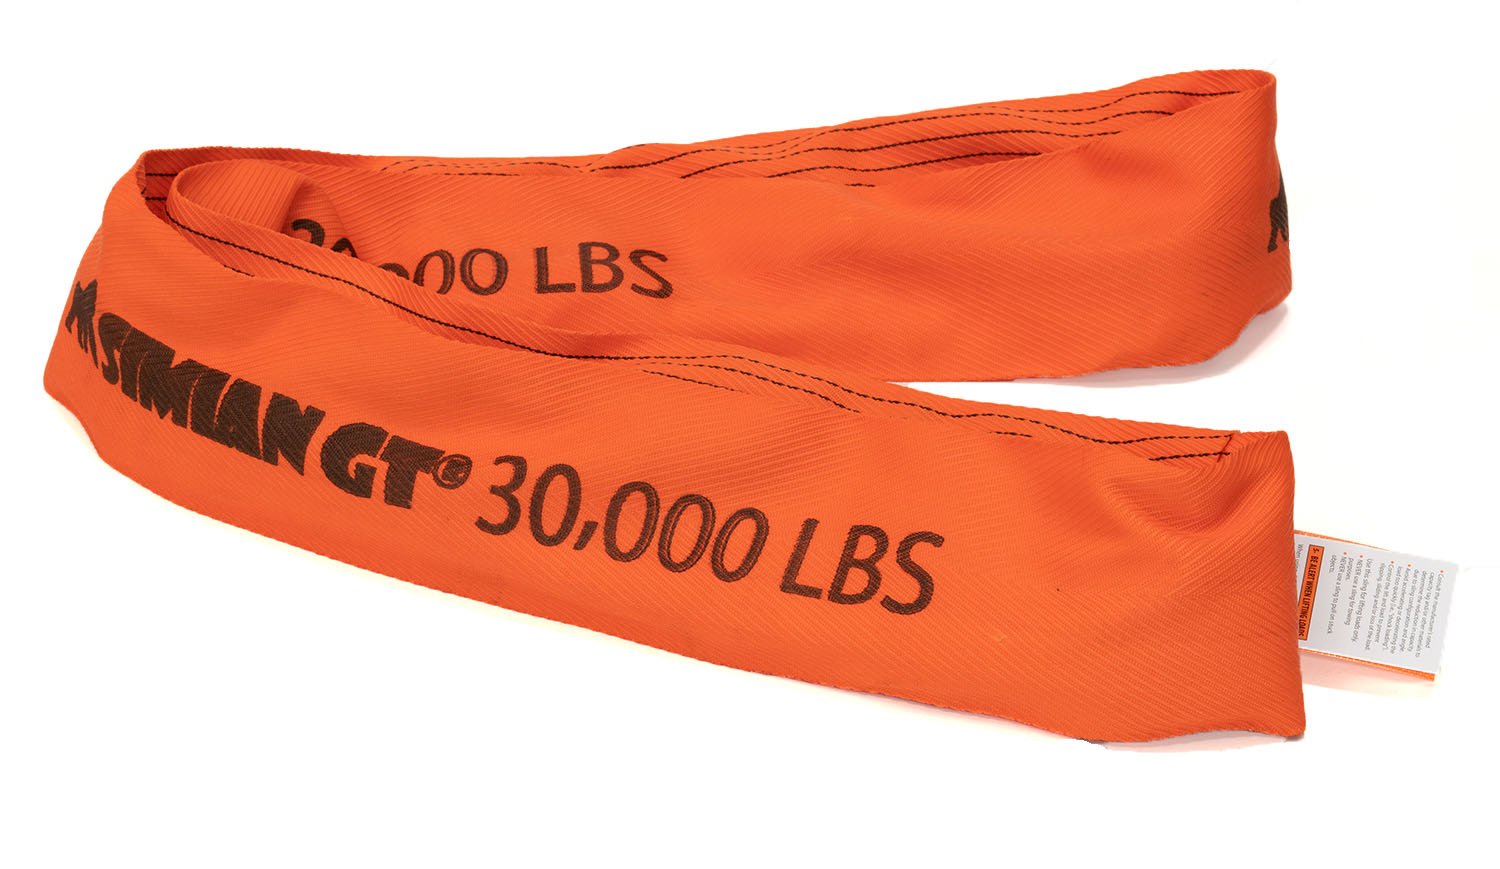 SIMIAN® GT Roundsling Orange Endless 30,000 lb